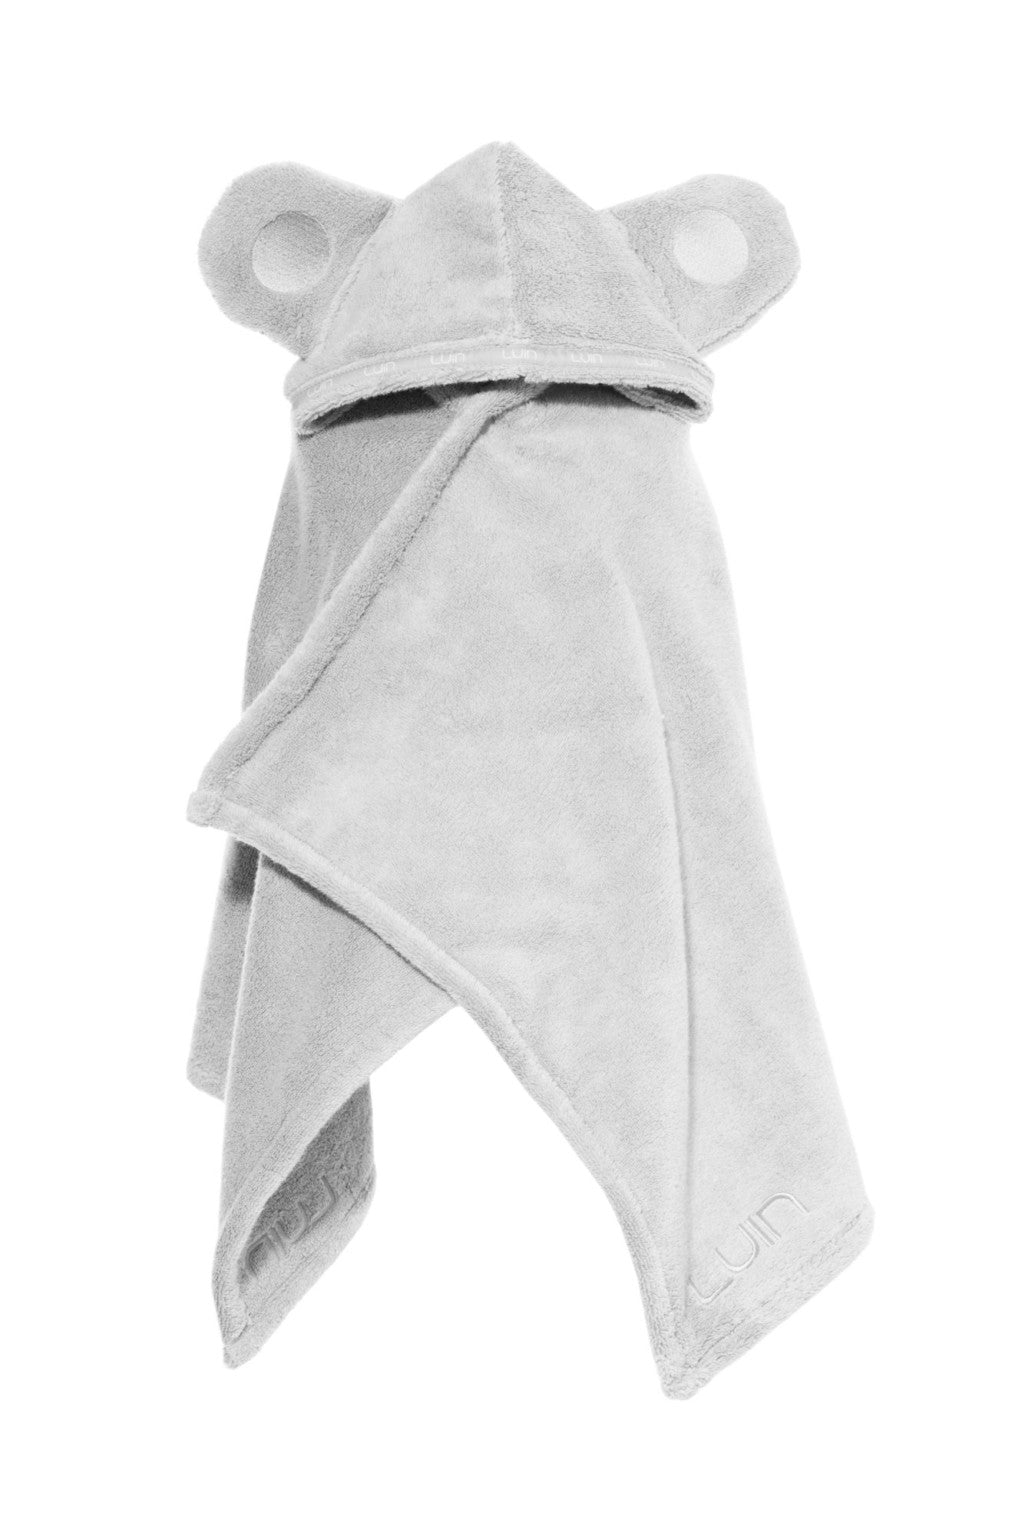 Luin Living Baby towel 0-5 years, Pearl Grey